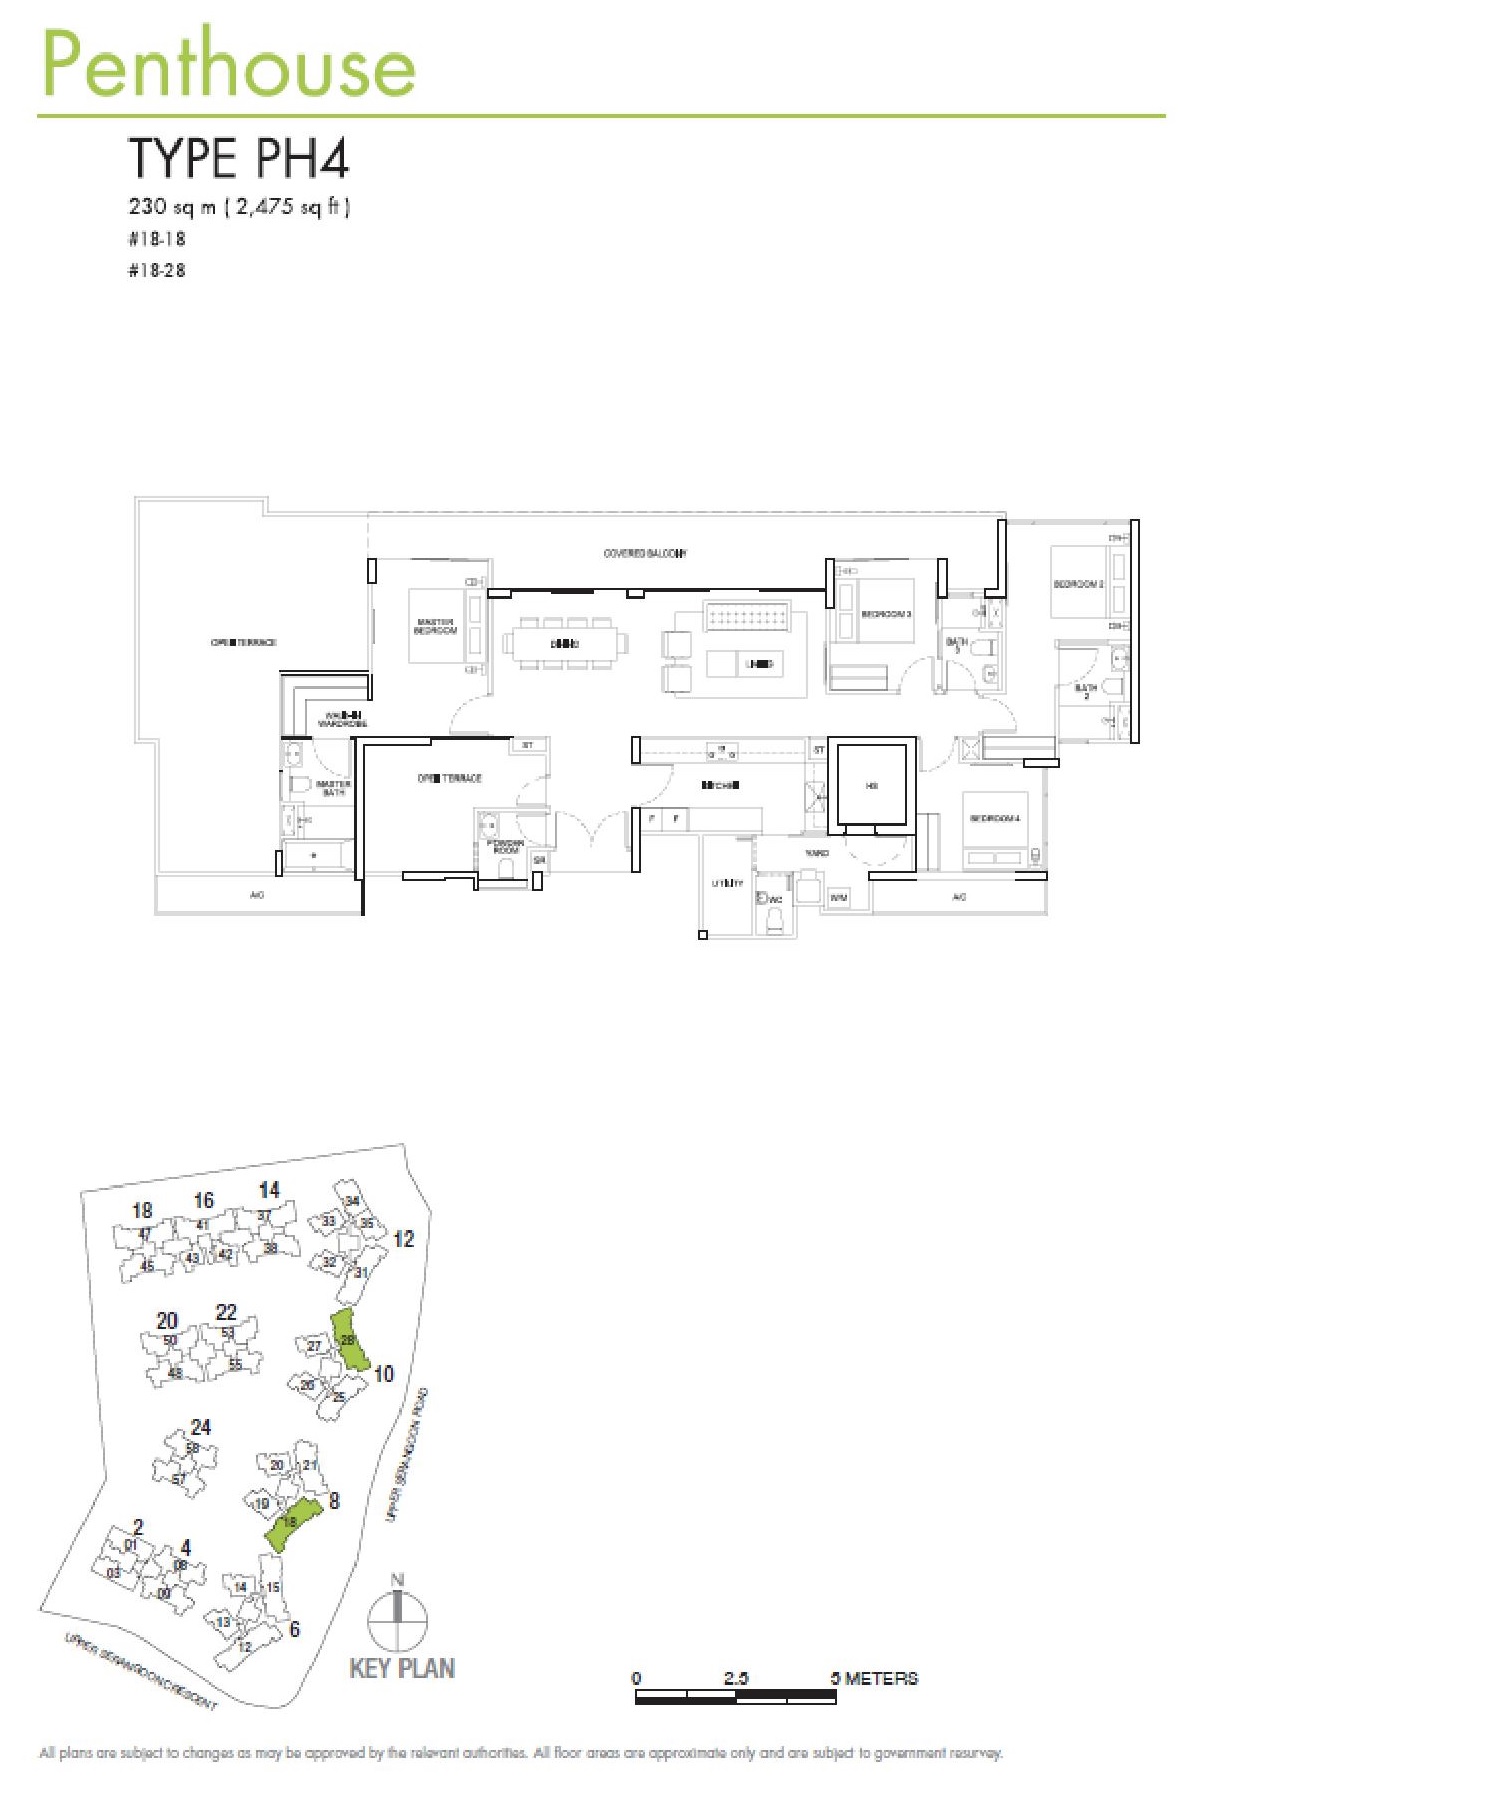 RiverSails 4 Bedroom Penthouse Type PH4 Floor Plans